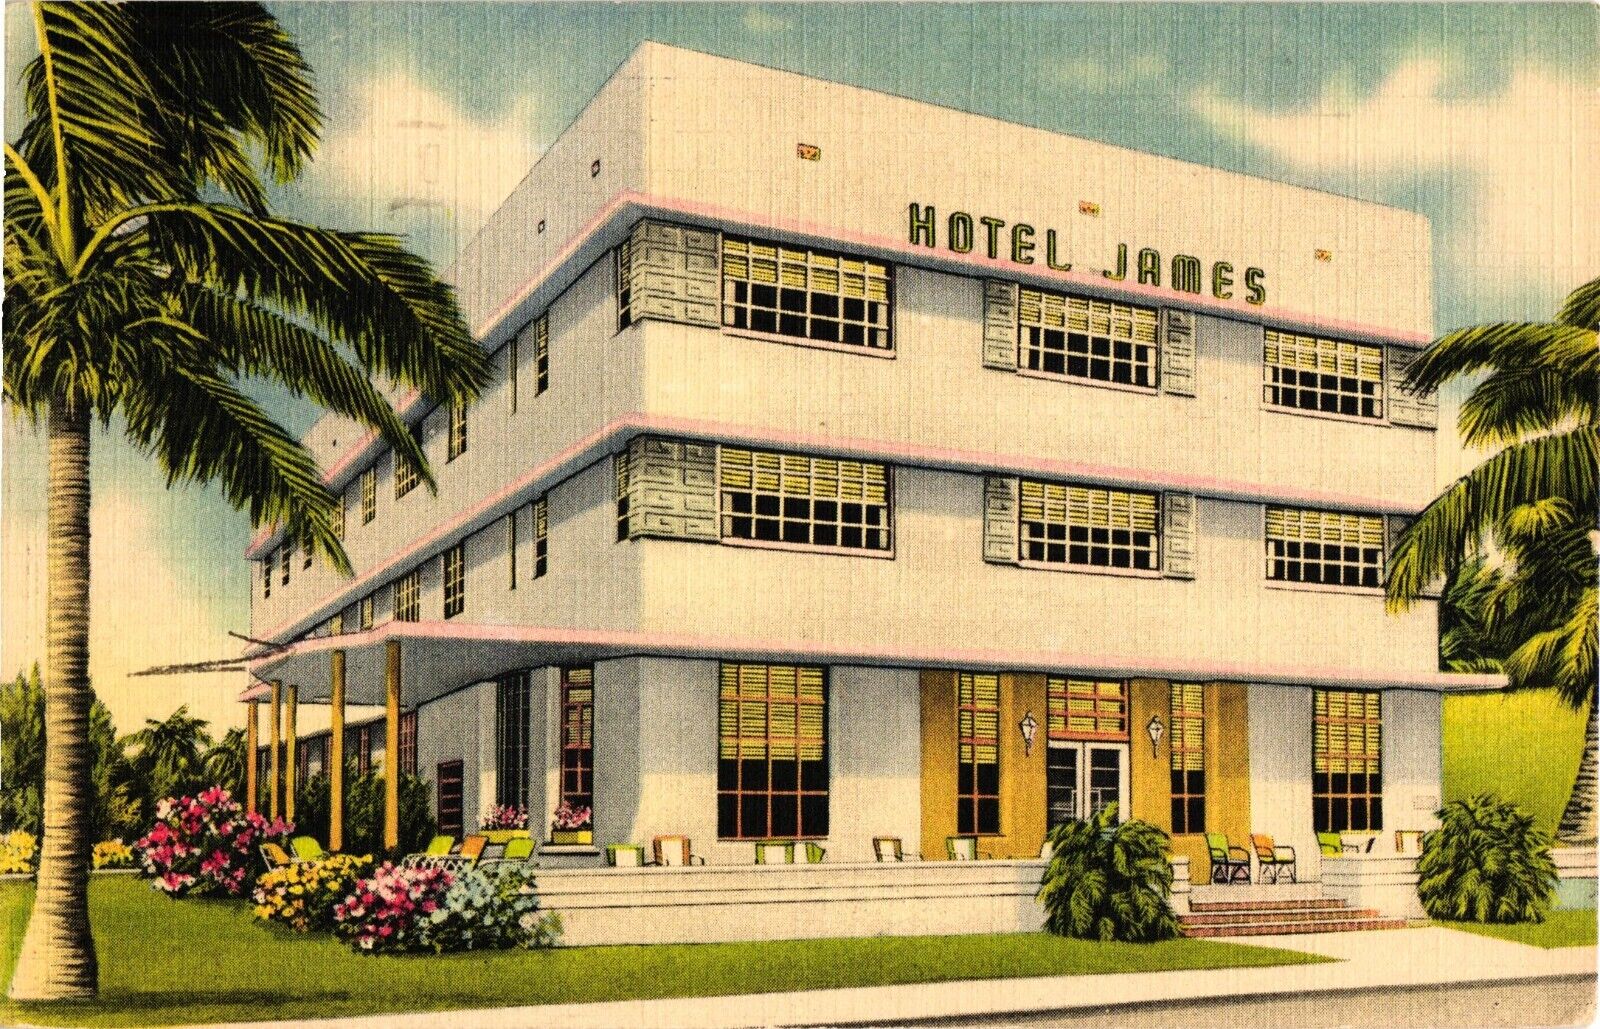 Miami Beach Florida Hotel James Postcard 1930s Art Deco Retro Modern